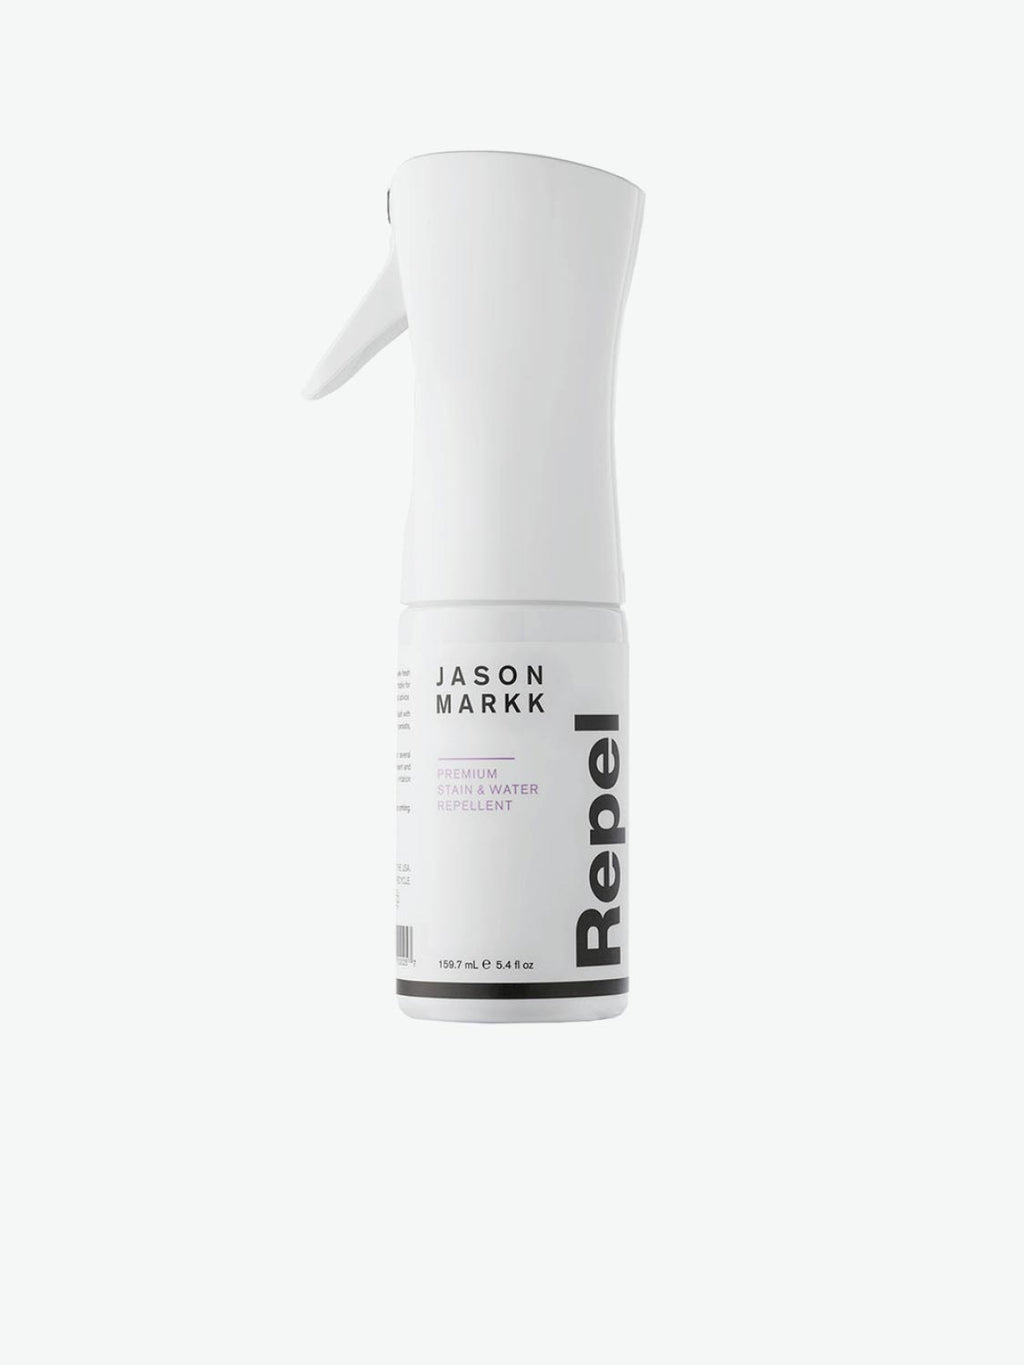 Jason Markk Repel Spray | The Project Garments - A